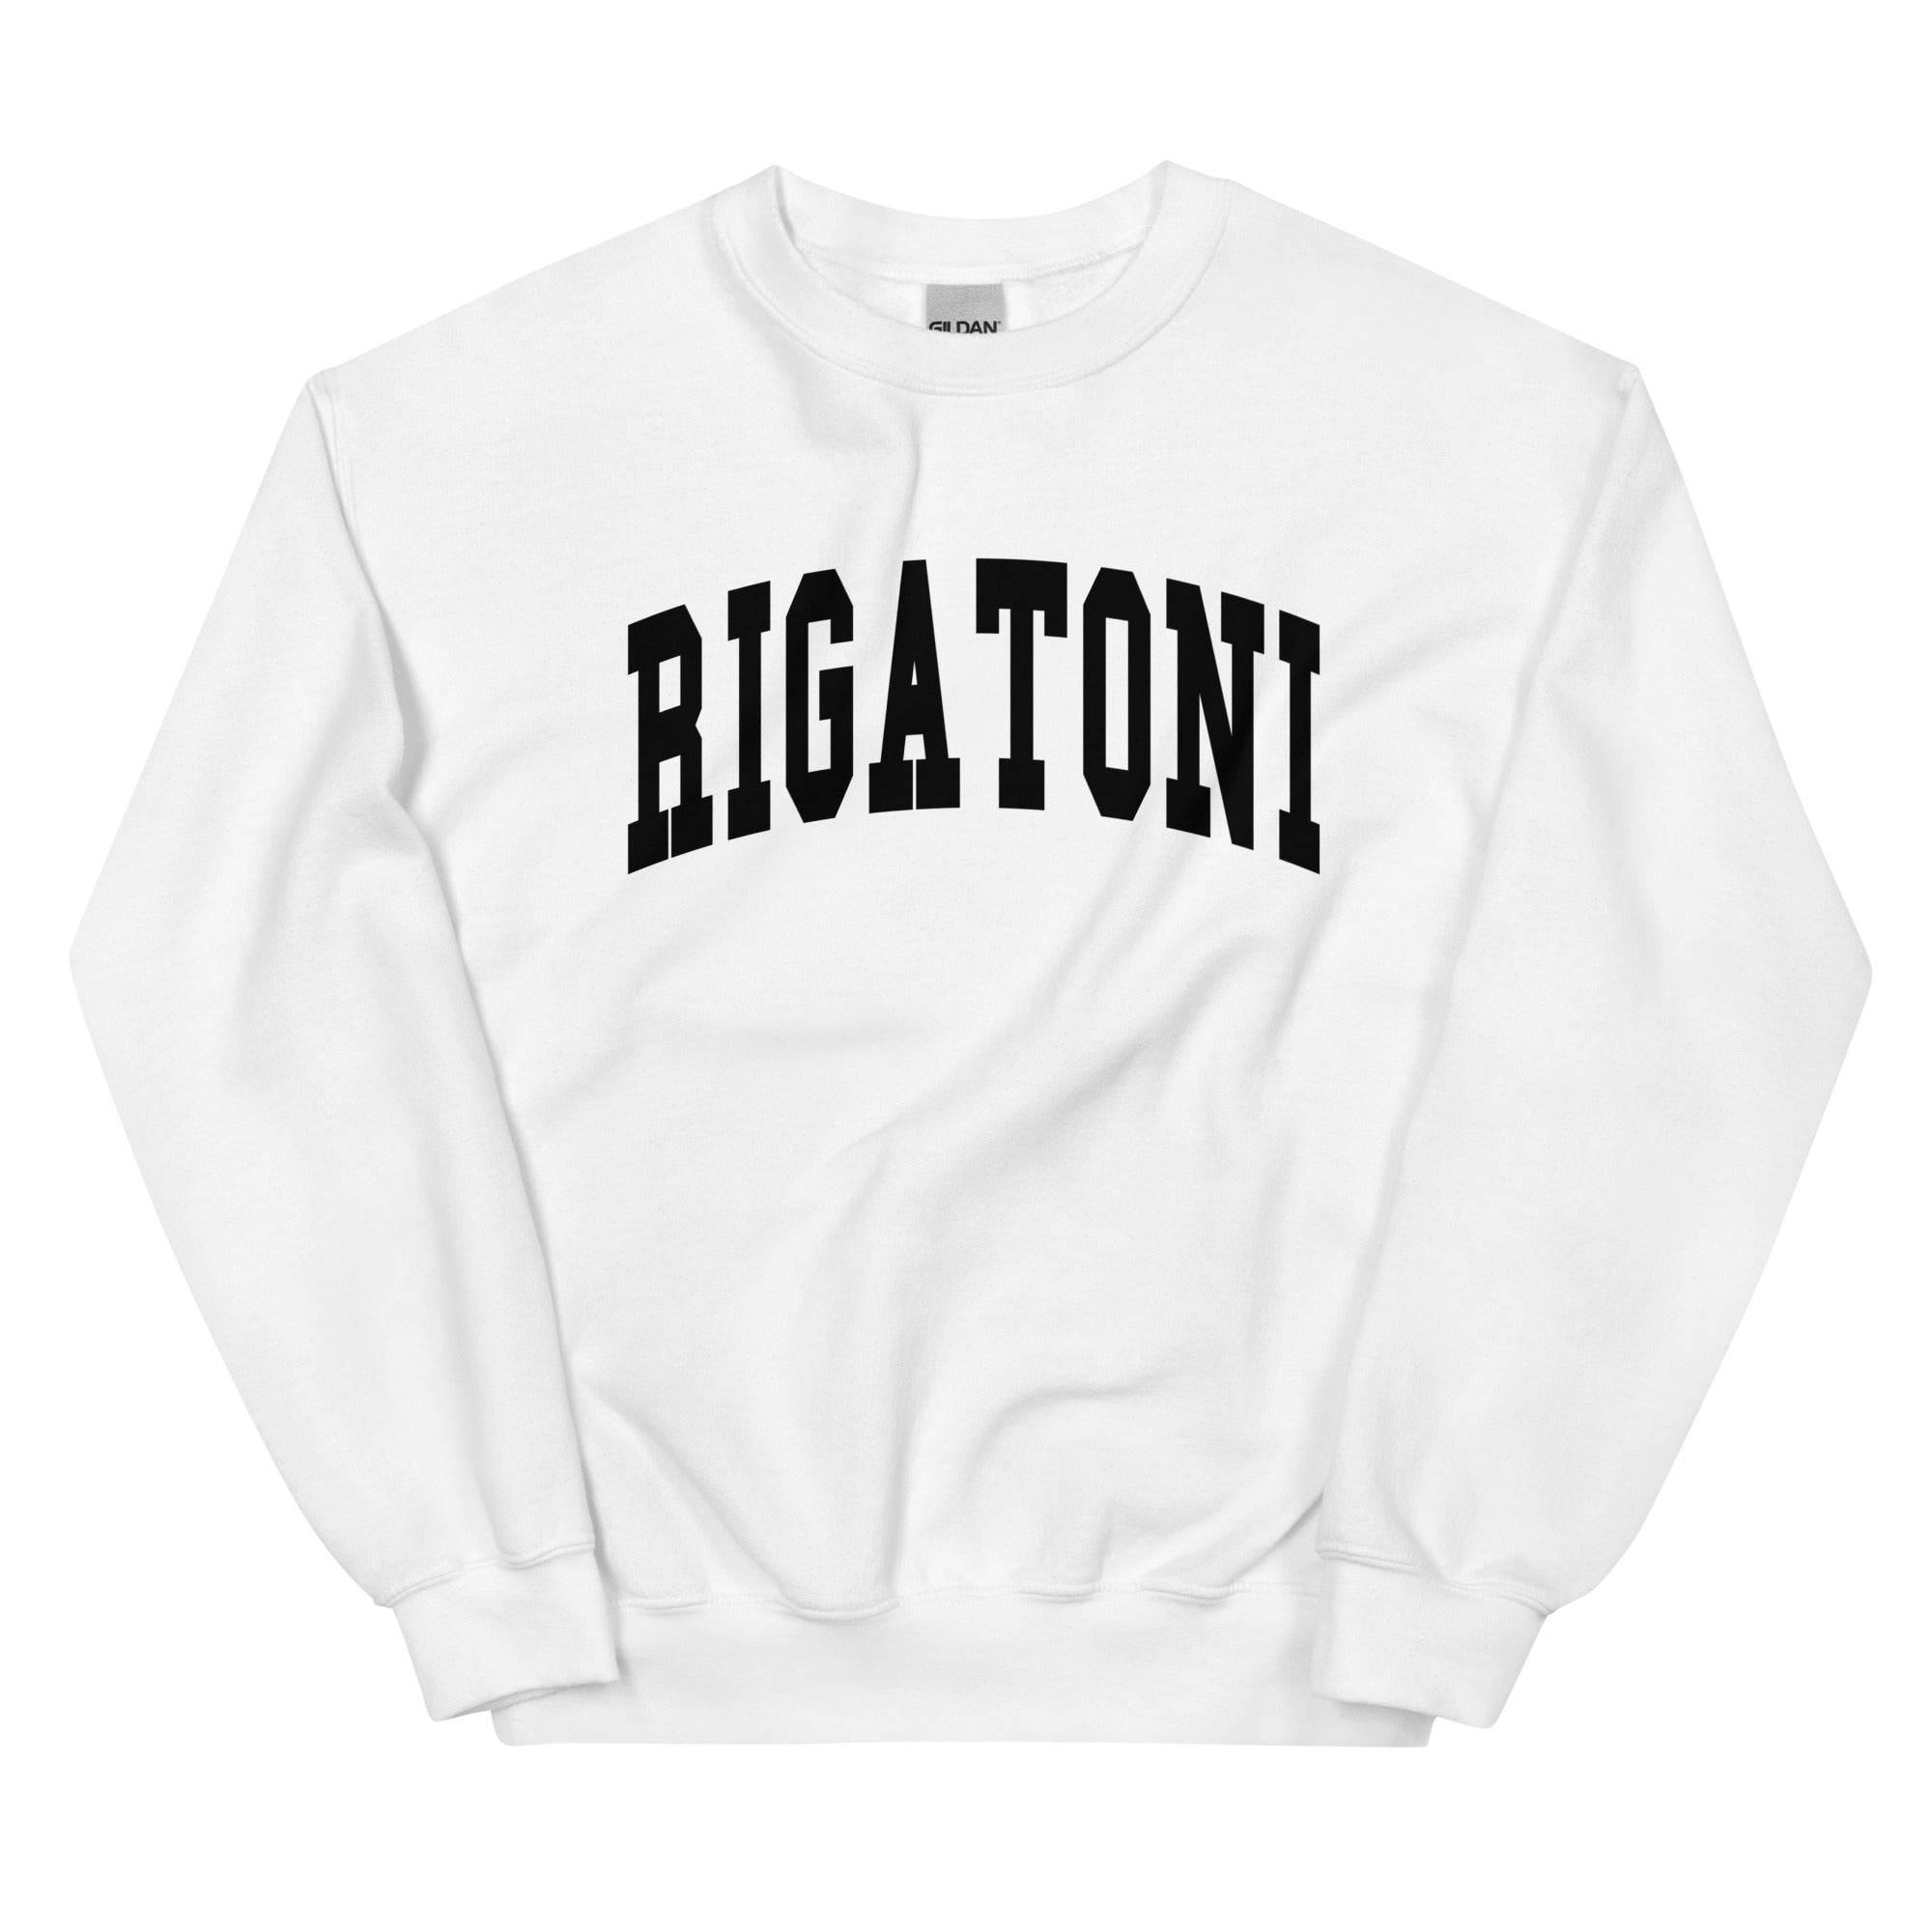 Rigatoni - Unisex Sweatshirt - The Refined Spirit